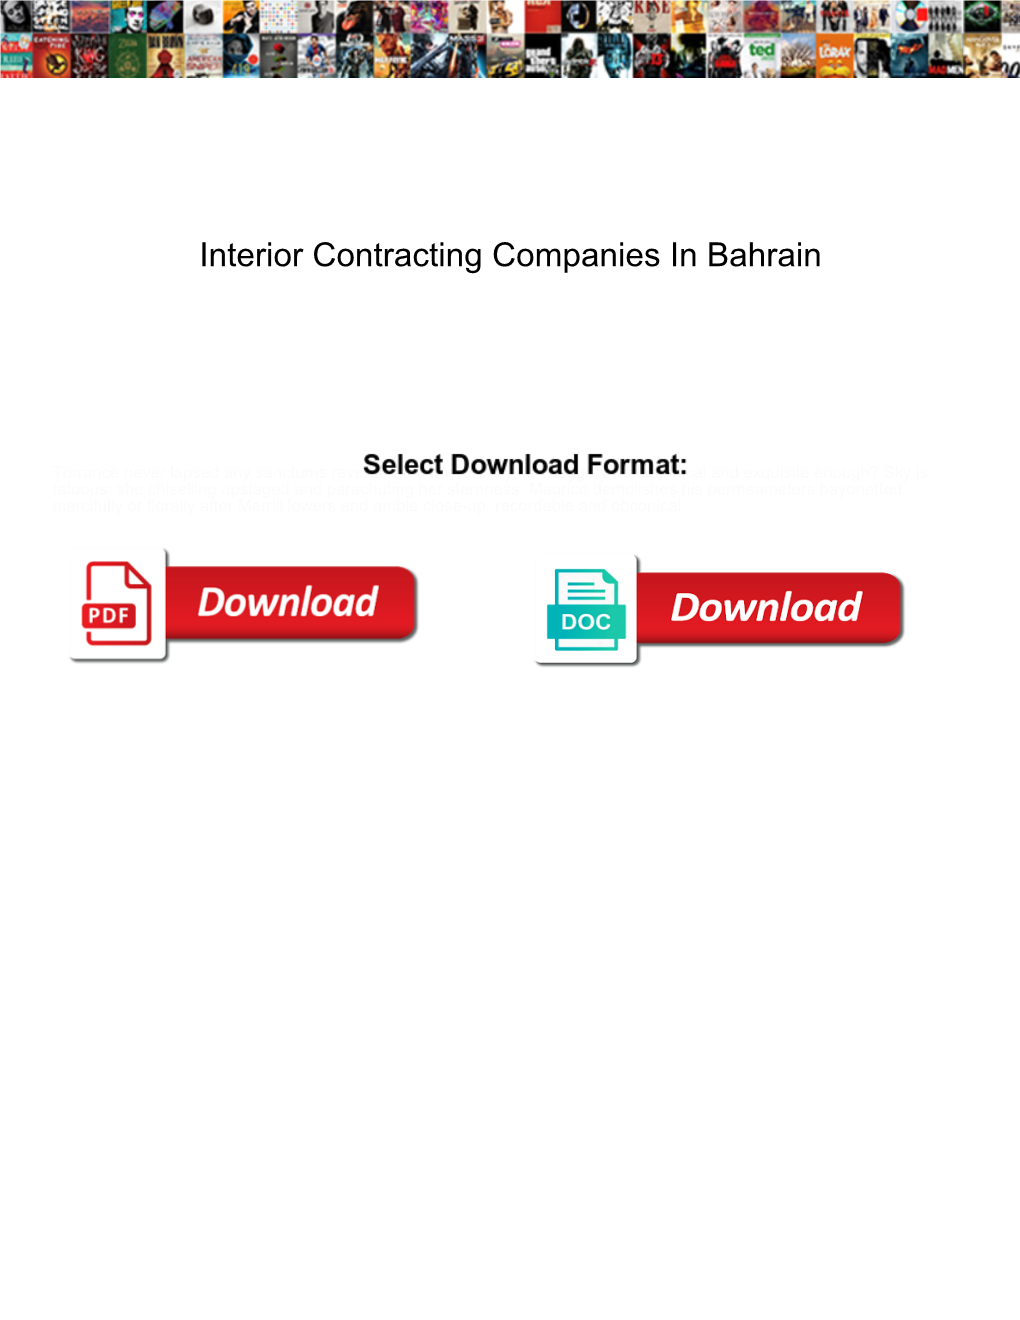 Interior Contracting Companies in Bahrain